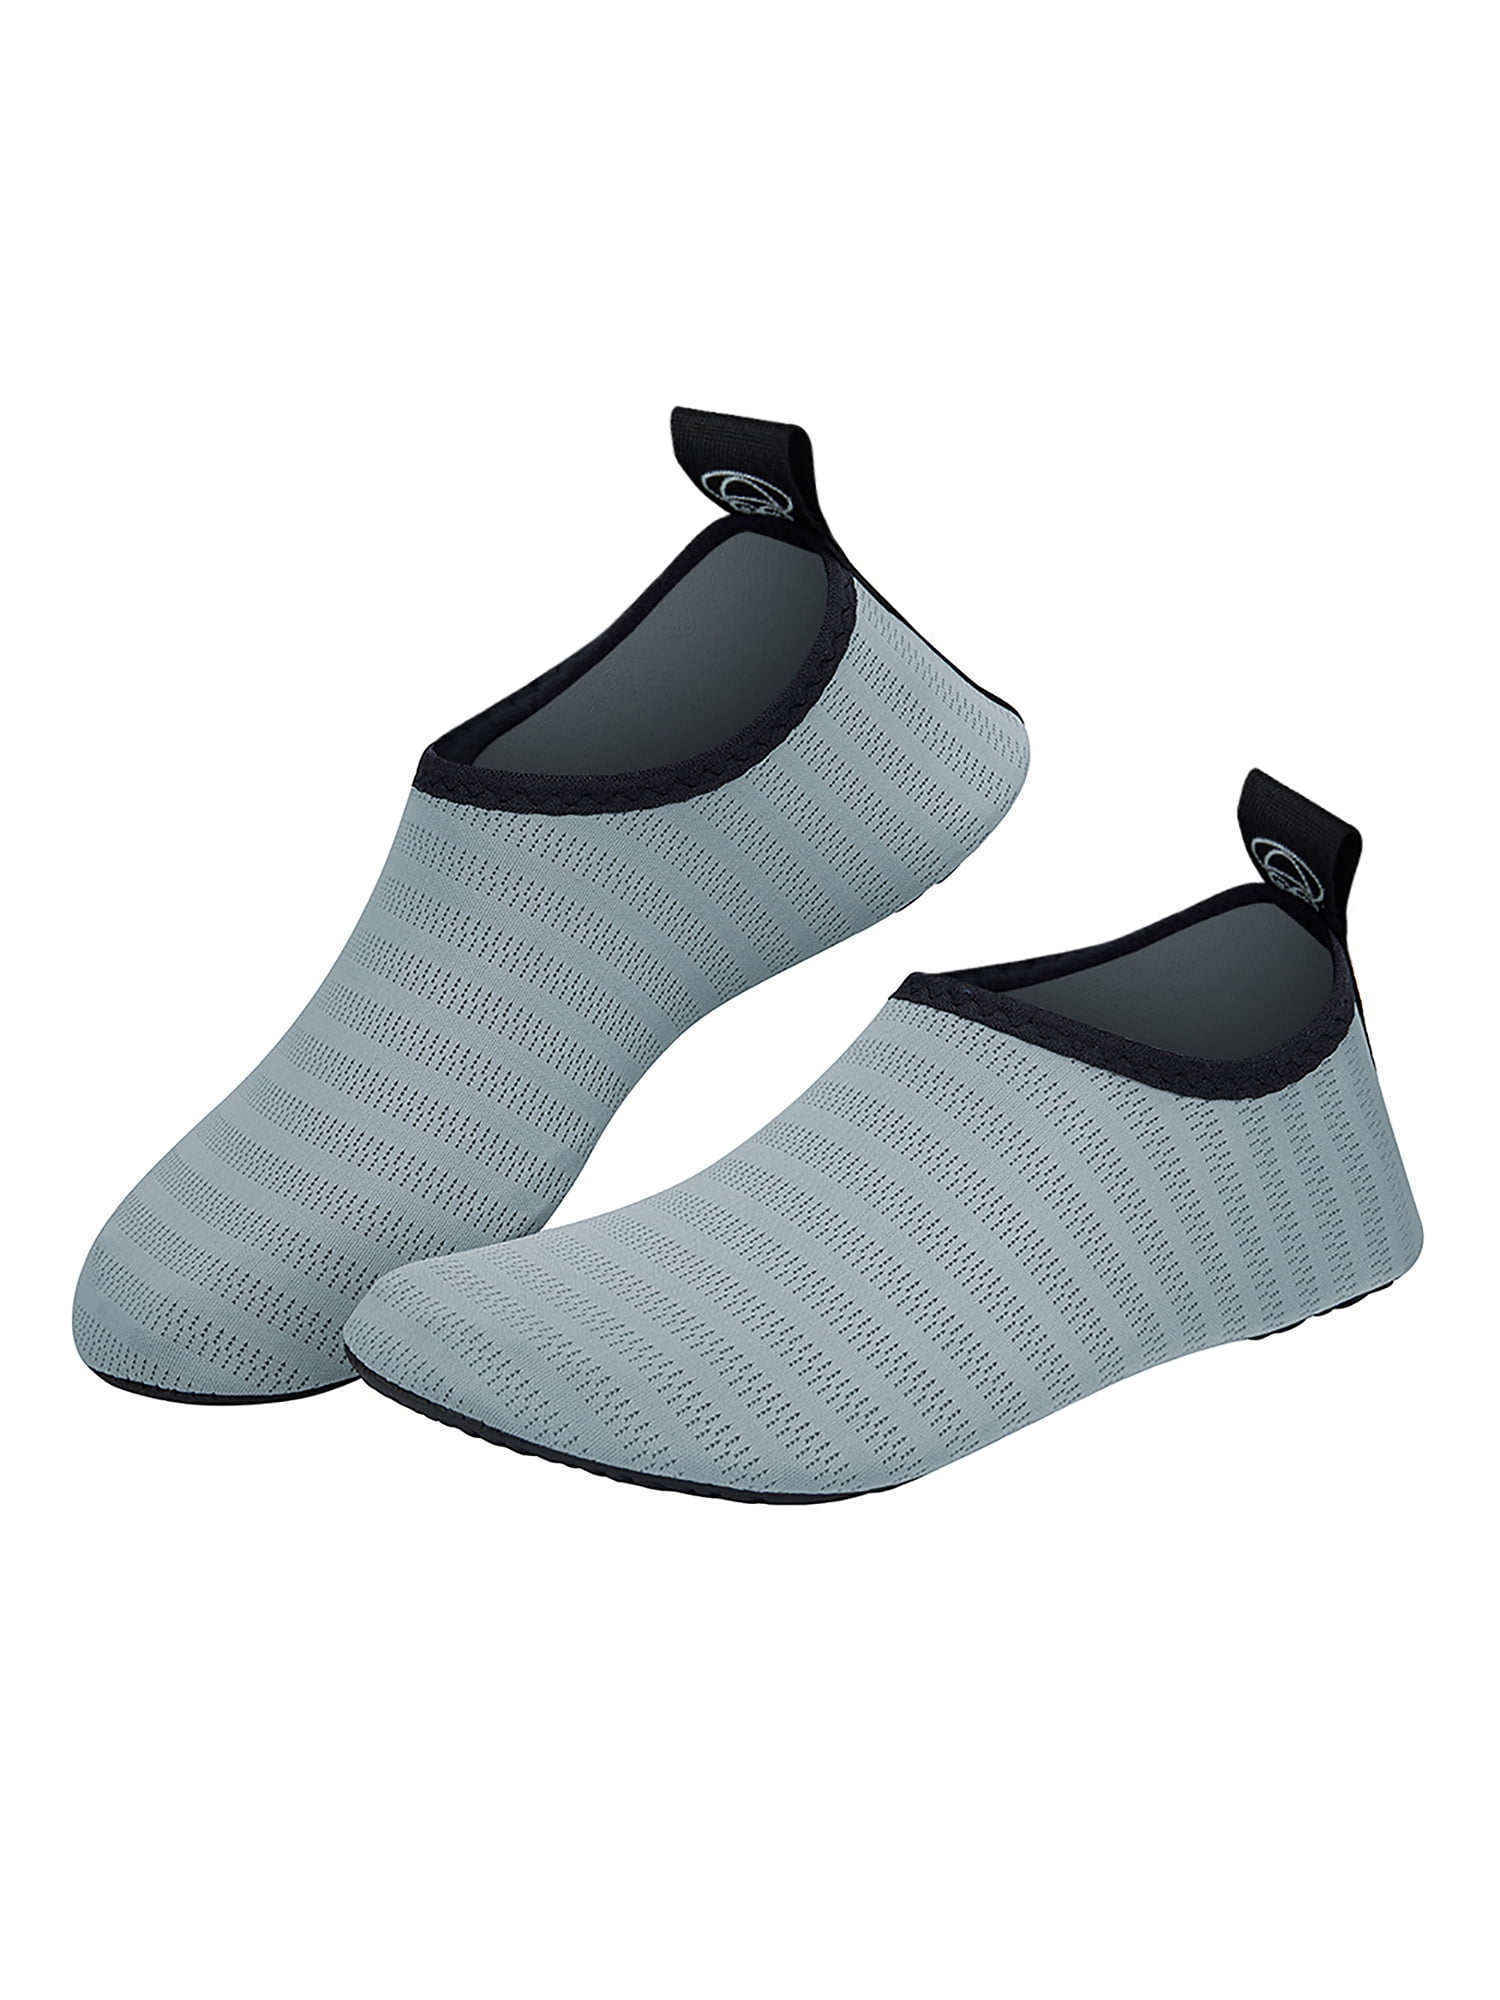 Unisex Barefoot Water Skin Shoes Aqua Socks Slip on Beach Swim Sports Surf Yoga